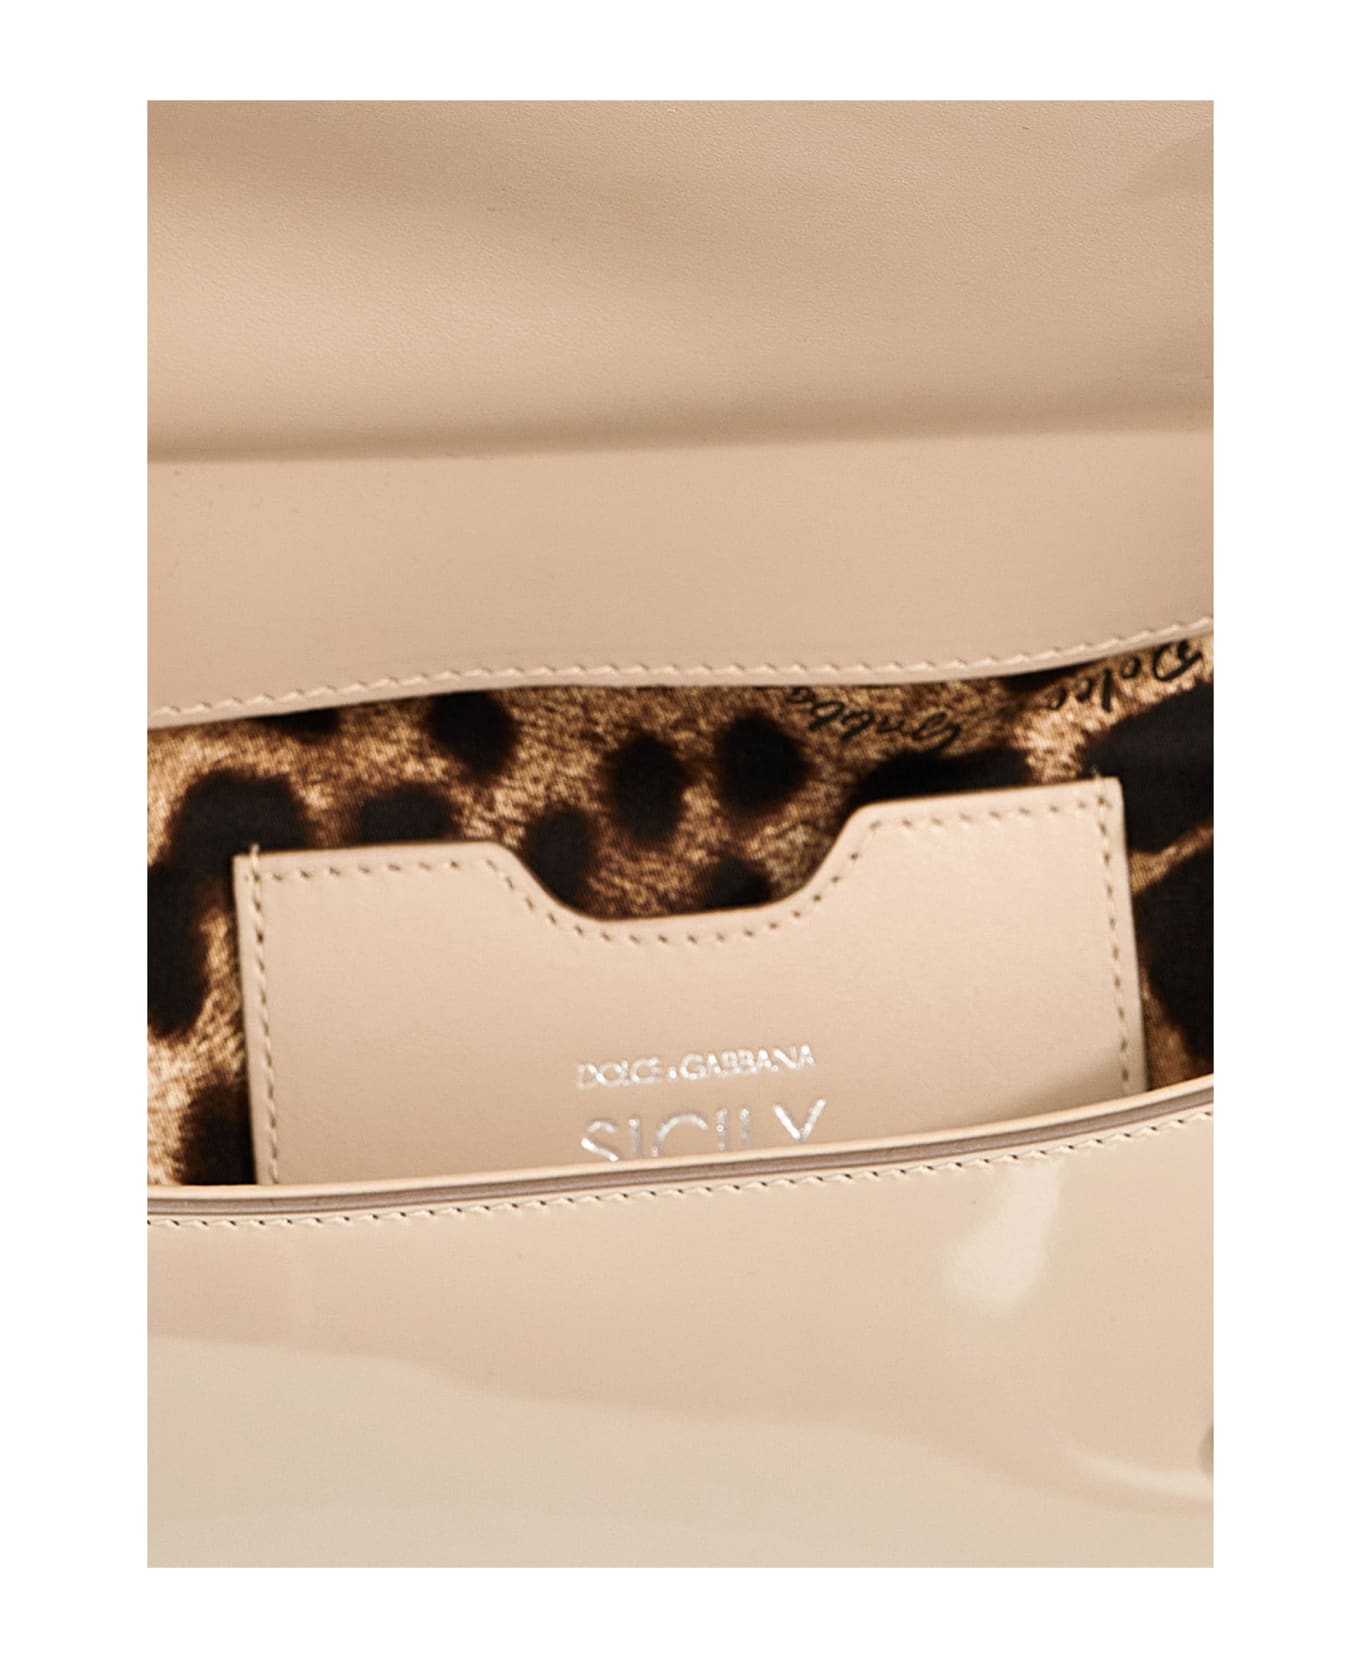 Dolce & Gabbana Logo Leather Handbag - Beige トートバッグ